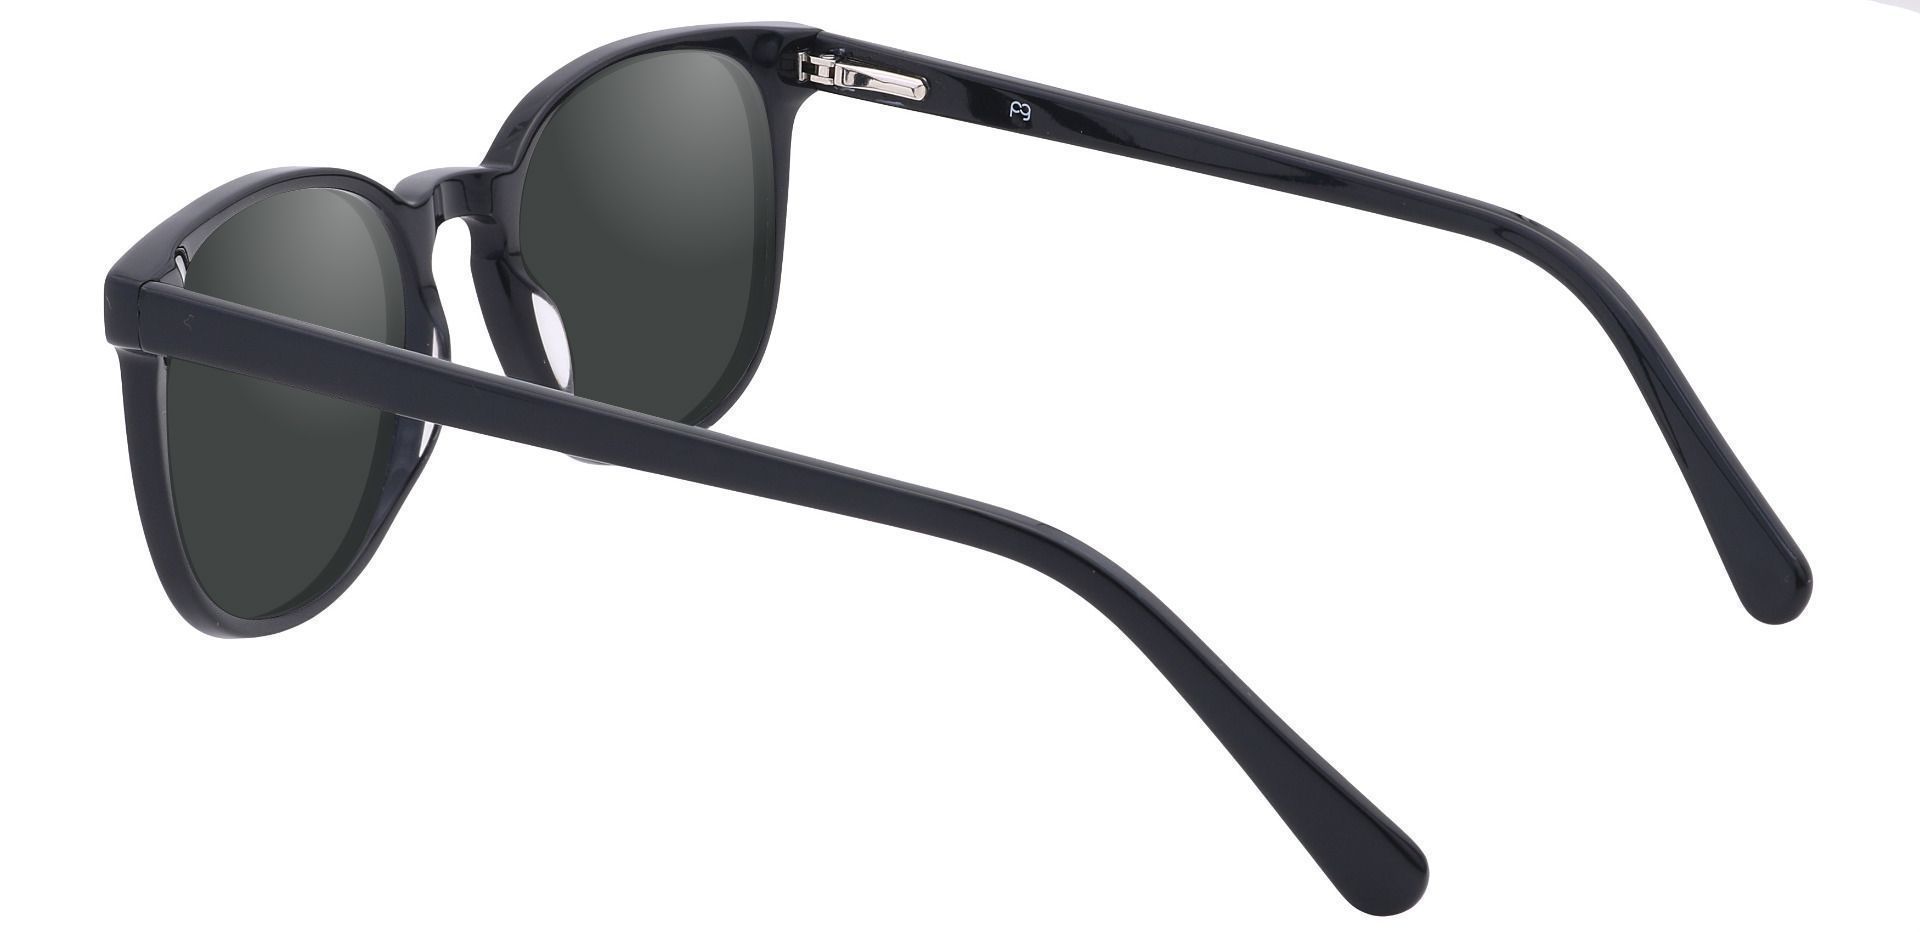 Nebula Round Non-Rx Sunglasses - Black Frame With Gray Lenses